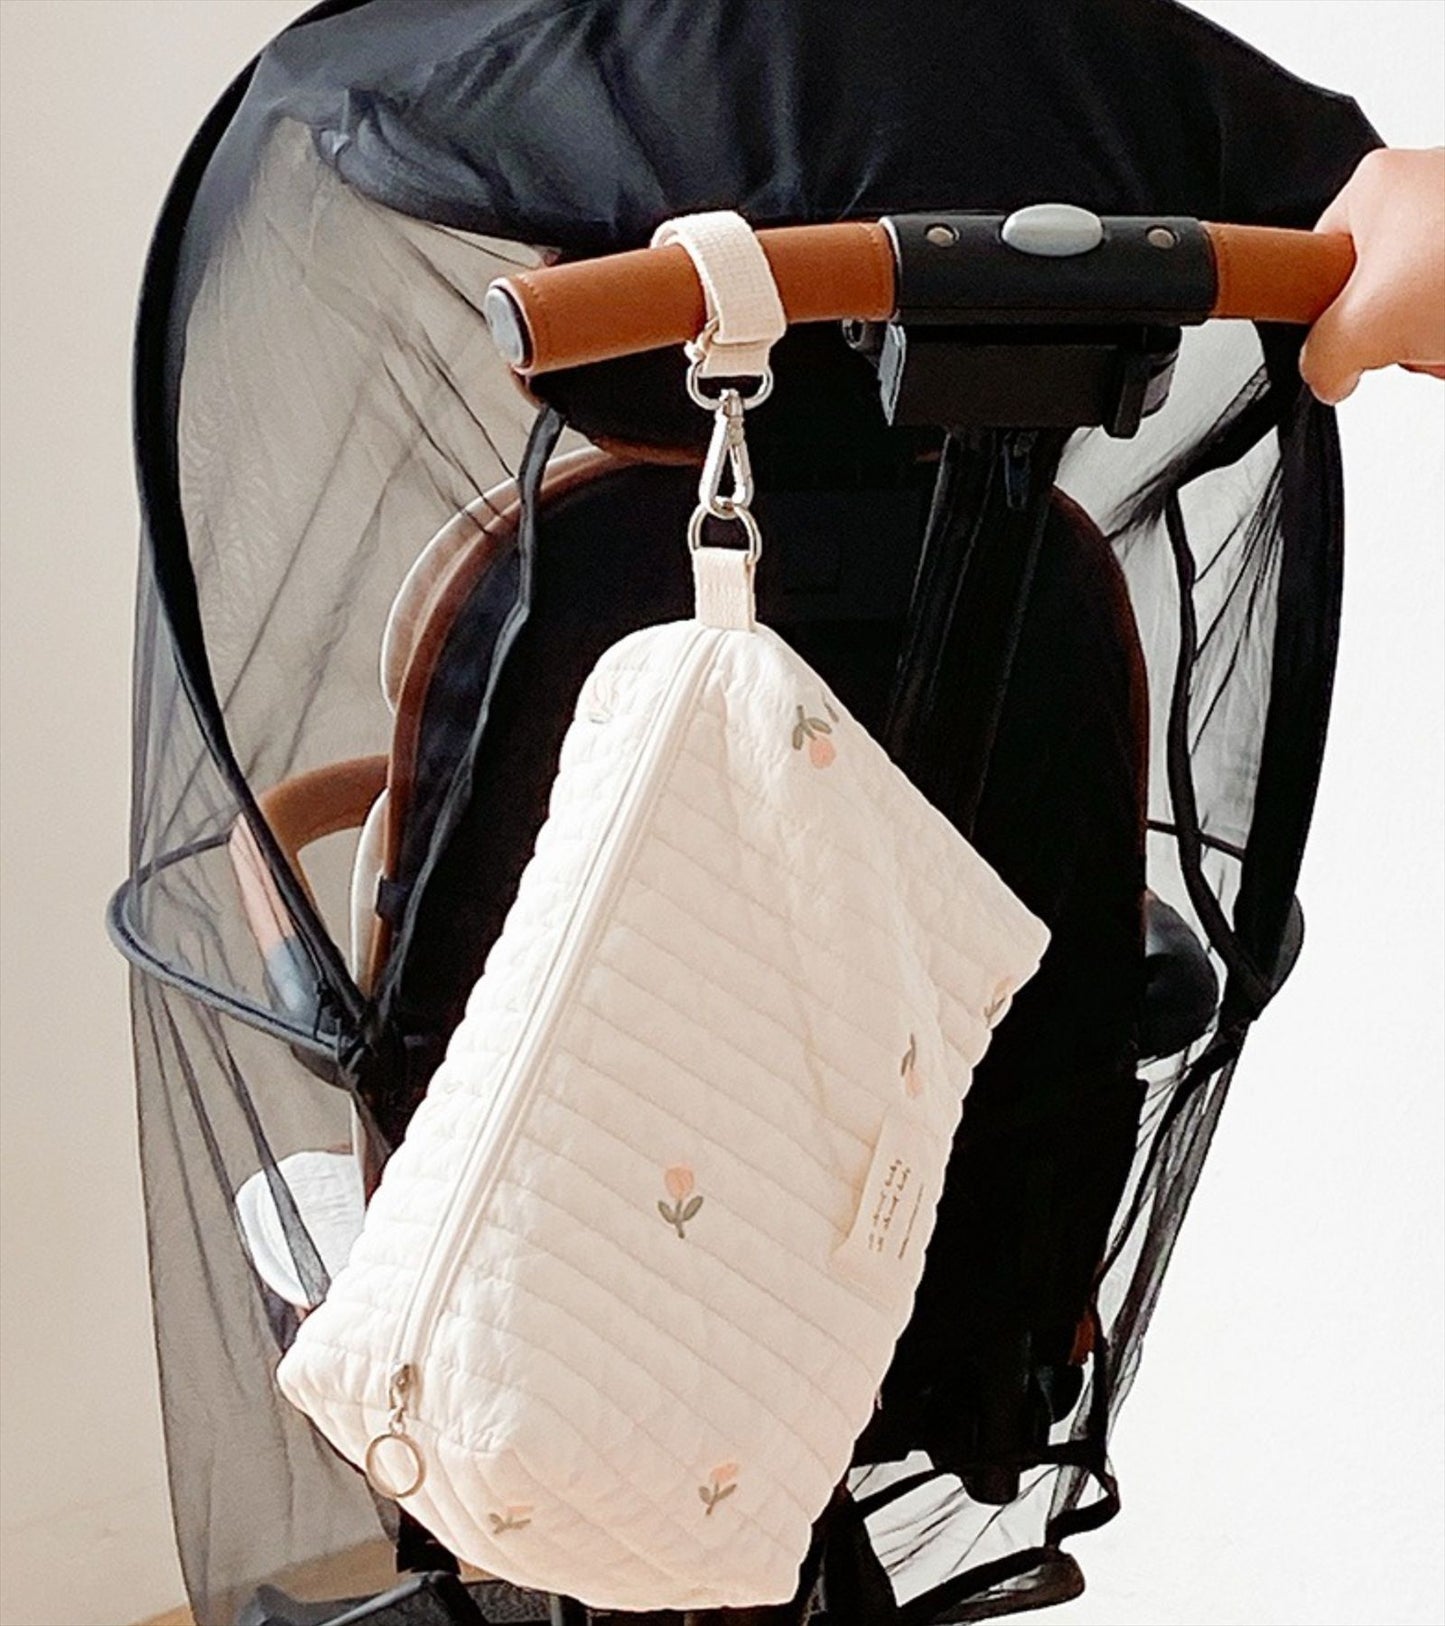 New Zipper Embroidered Cotton Derived Stroller Diaper Bag